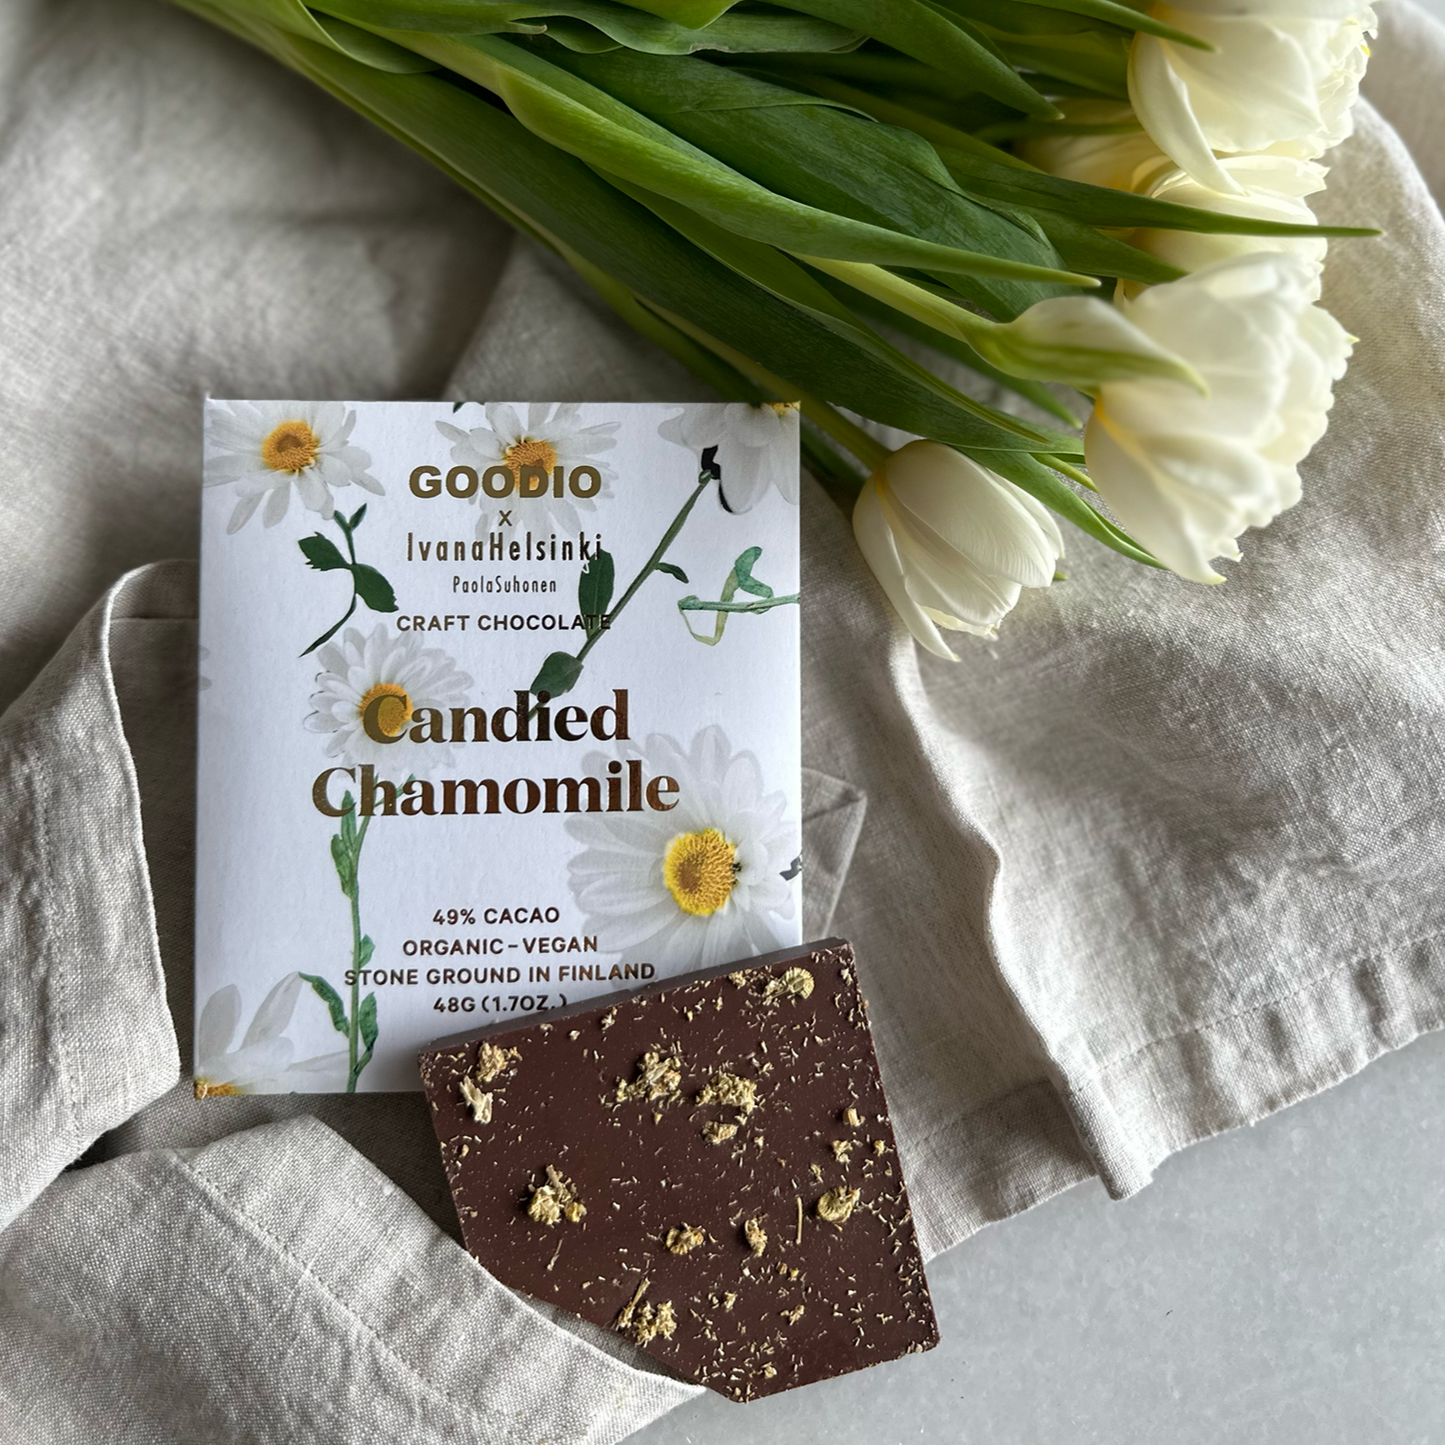 Goodio Candied chamomile vegan chocolate